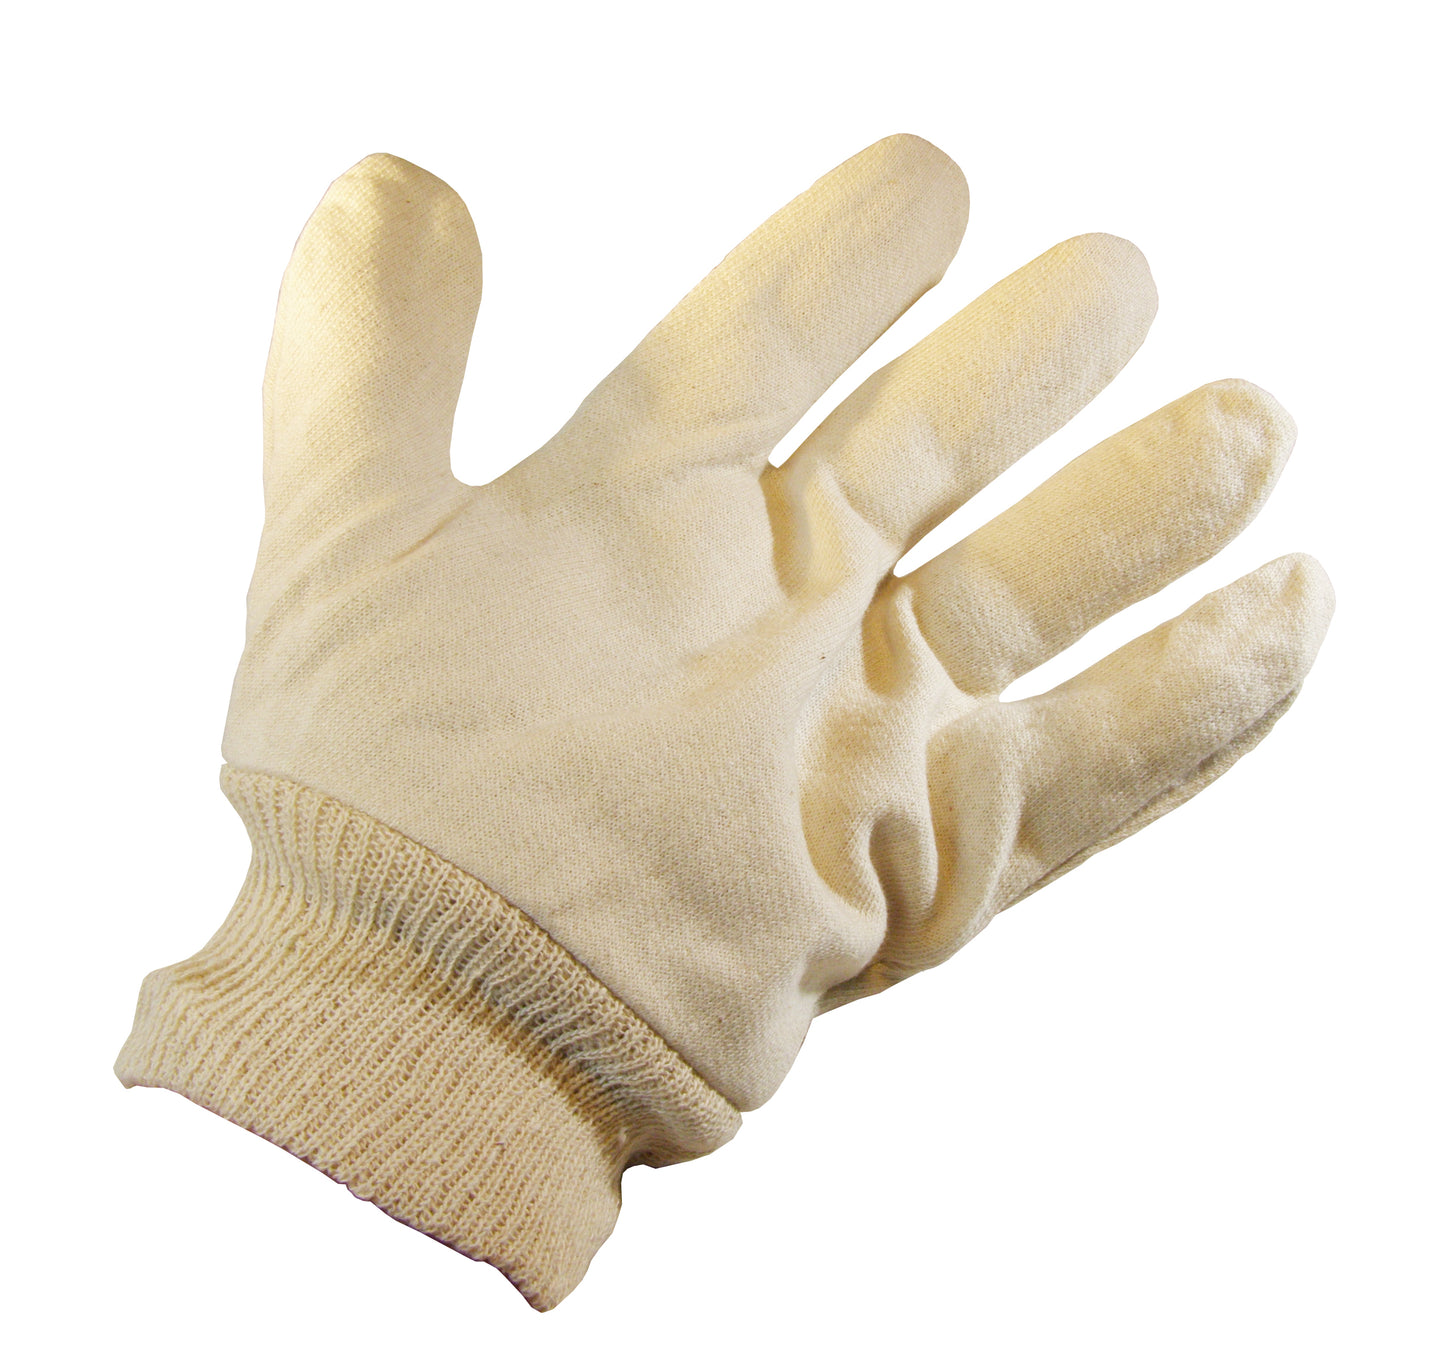 Jersey Knit Gloves, Large, White, 100% Cotton - KC9405